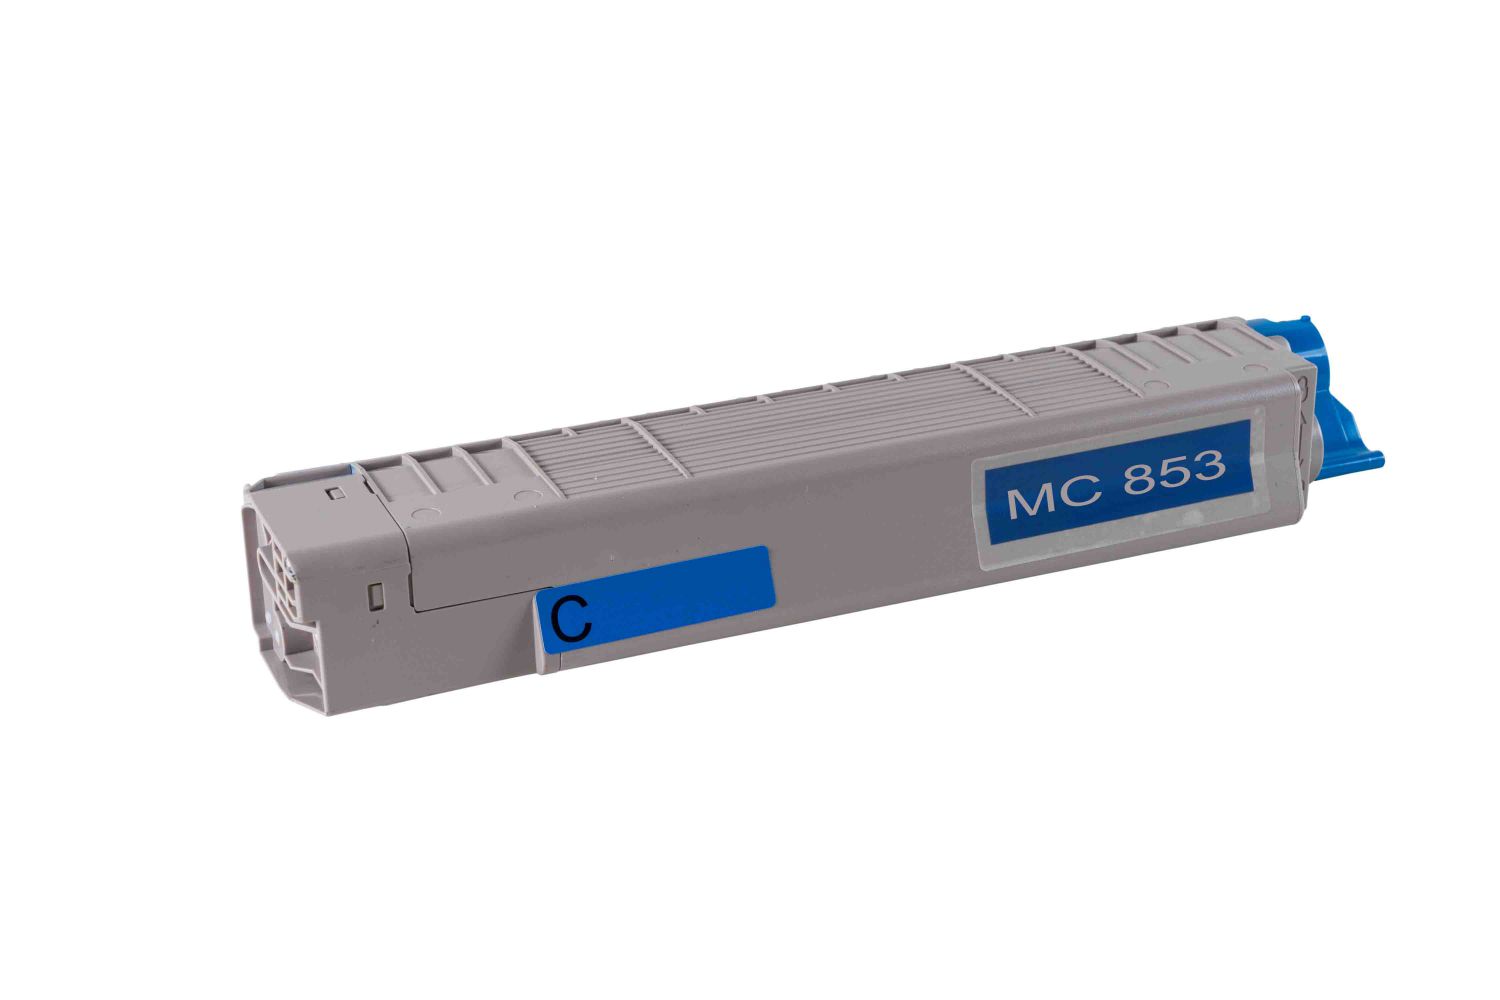 Toner module with MC853 / MC873 - Tonrec Swiss Produkte - Swiss GmbH, Deutschland Tonerkassetten Recycling